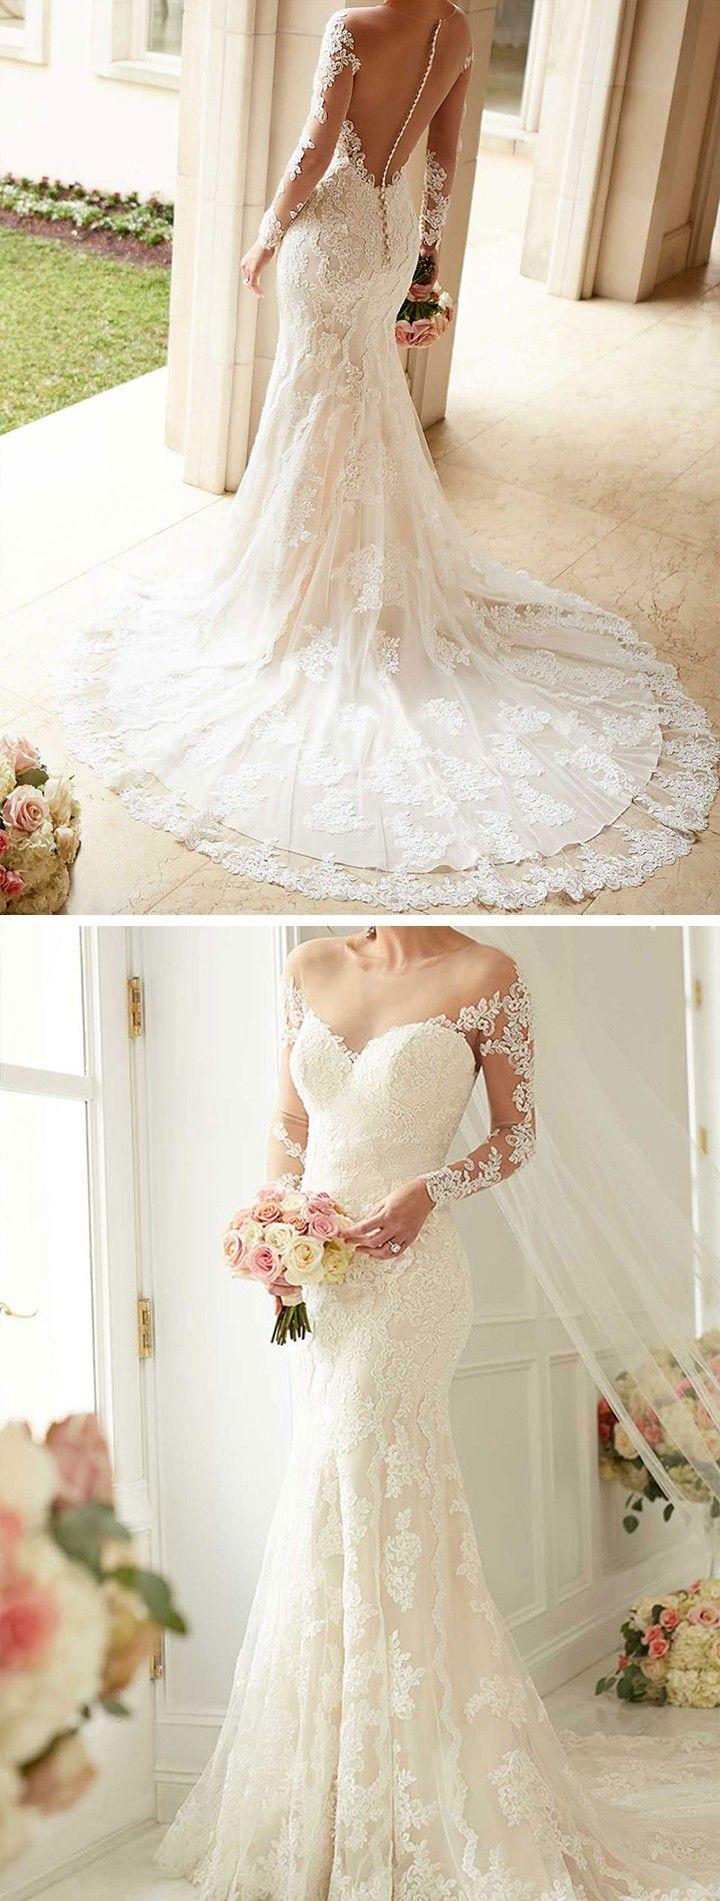 زفاف - Wedding Dresses With Illusion Lace Sleeves